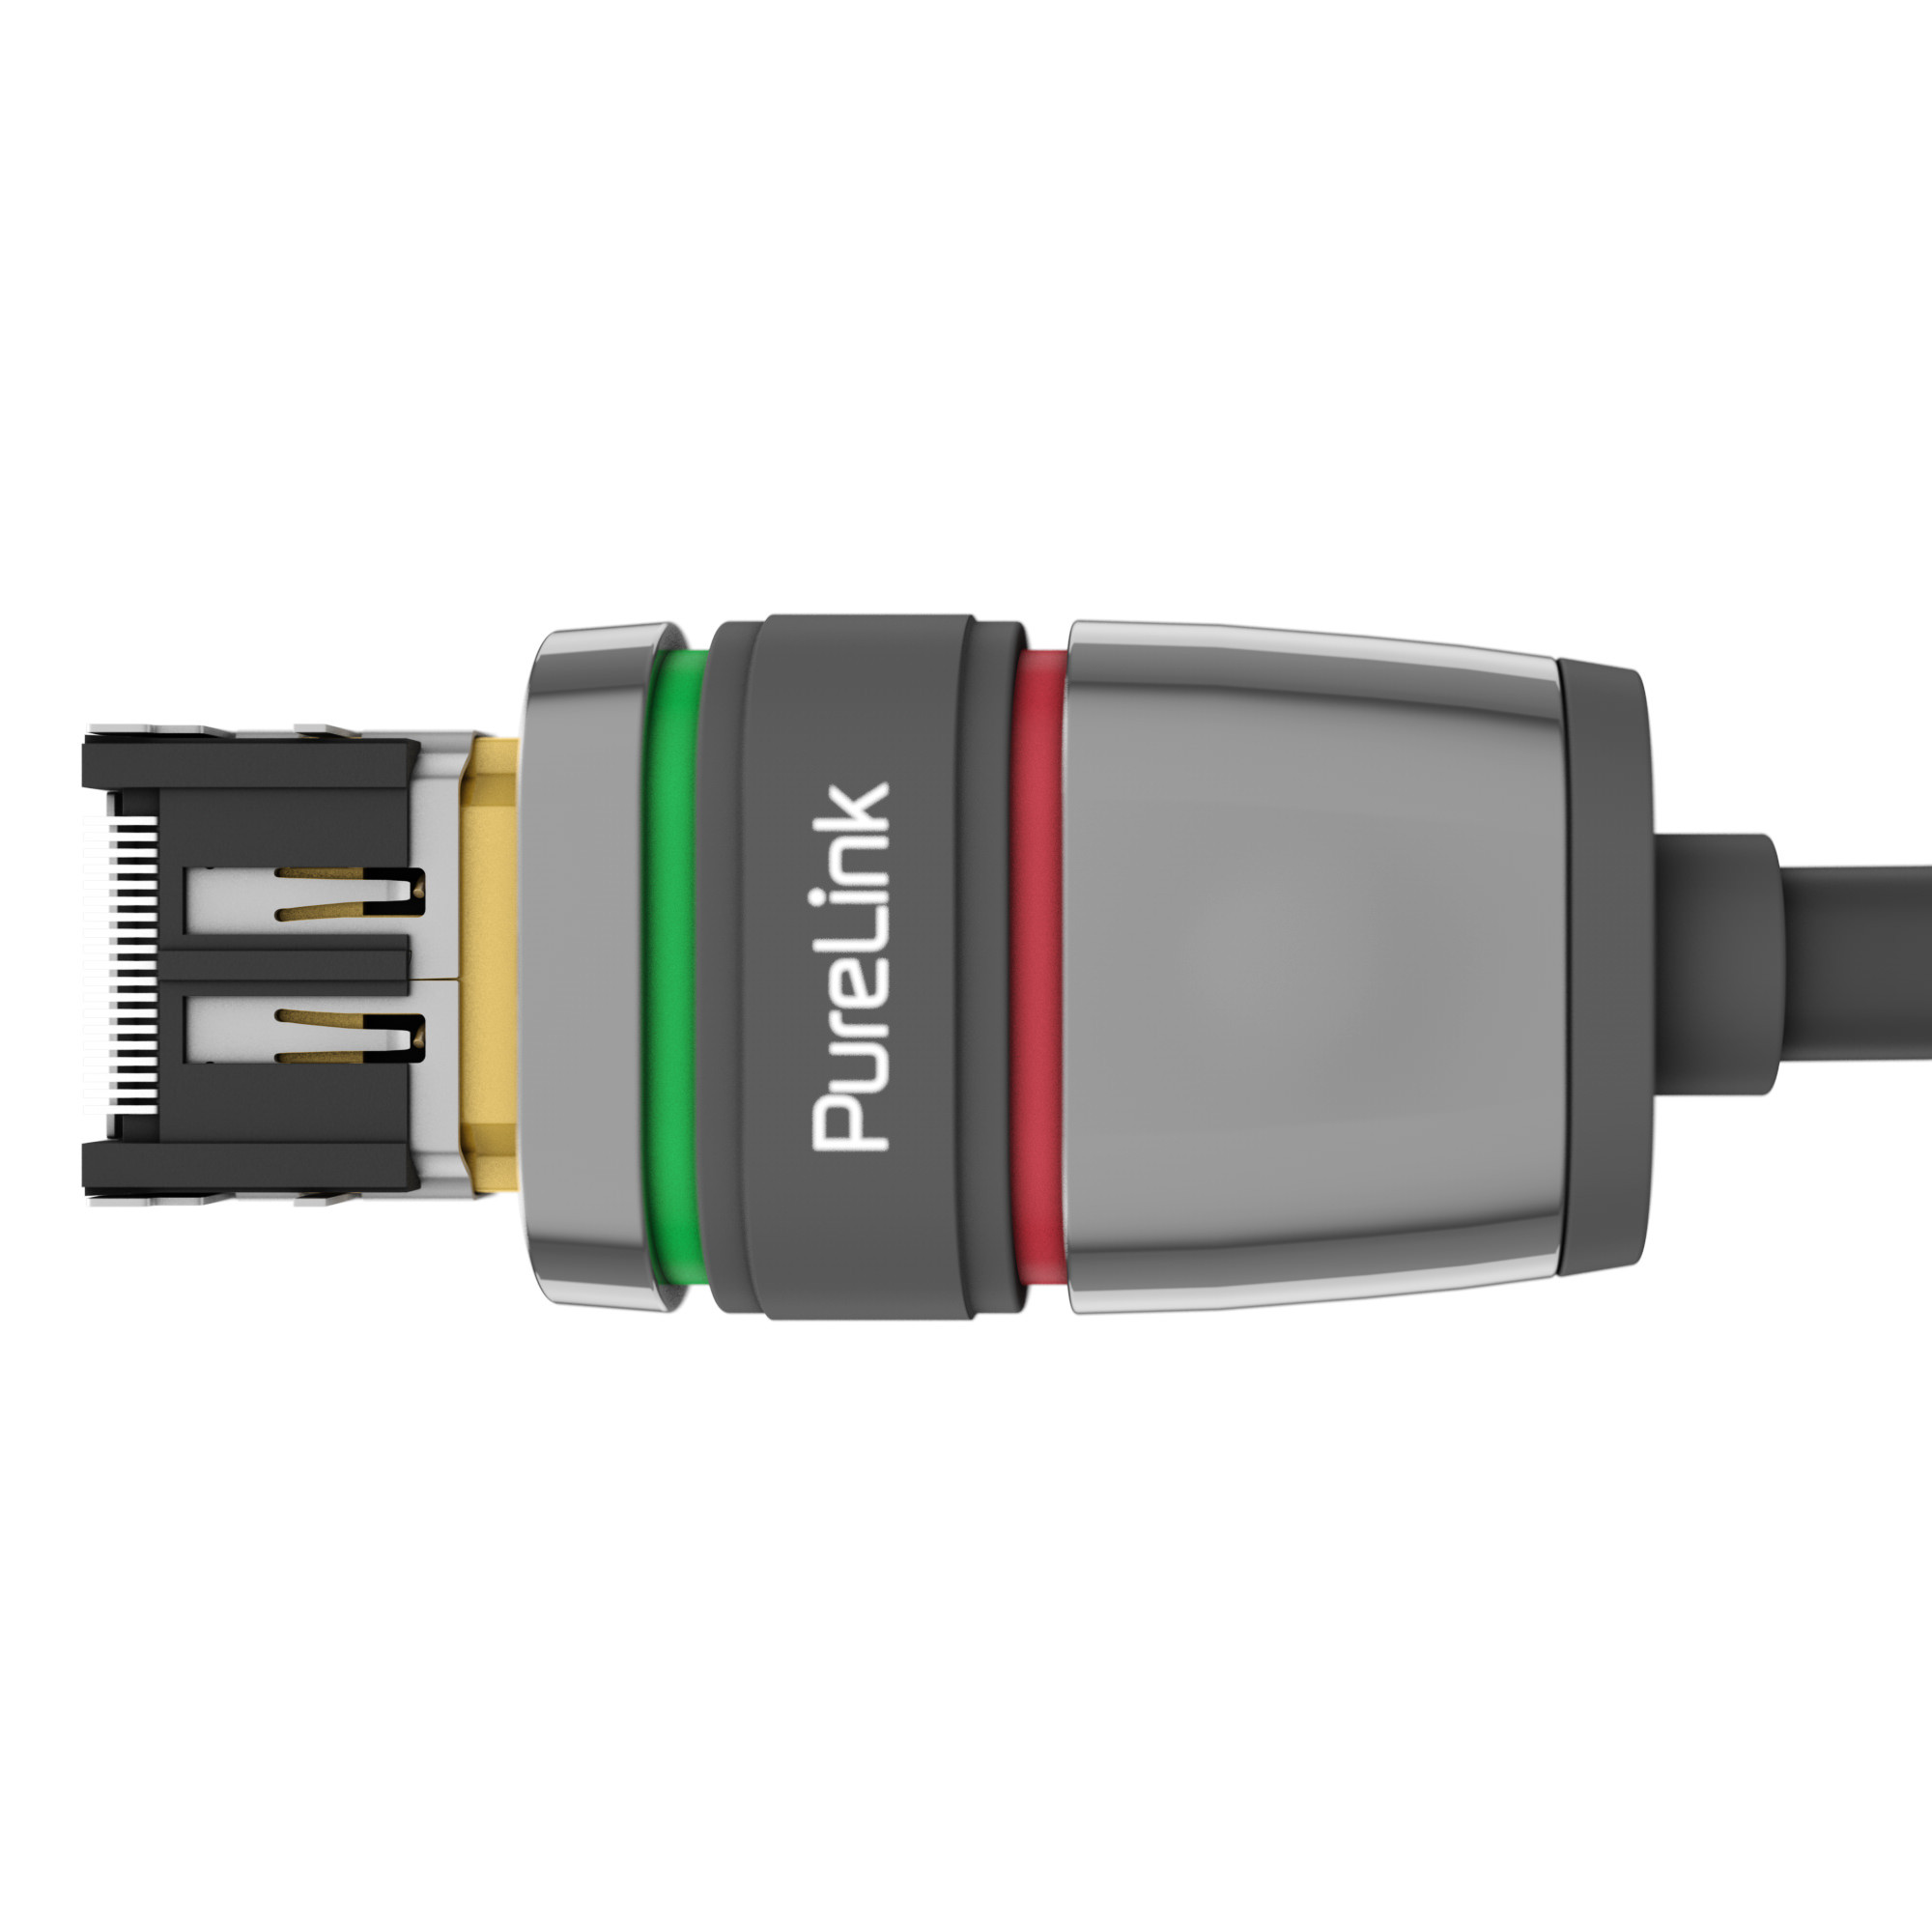 PureLink-Ultimate-High-Speed-HDMI-Kabel-met-Ultra-Lock-System-10m